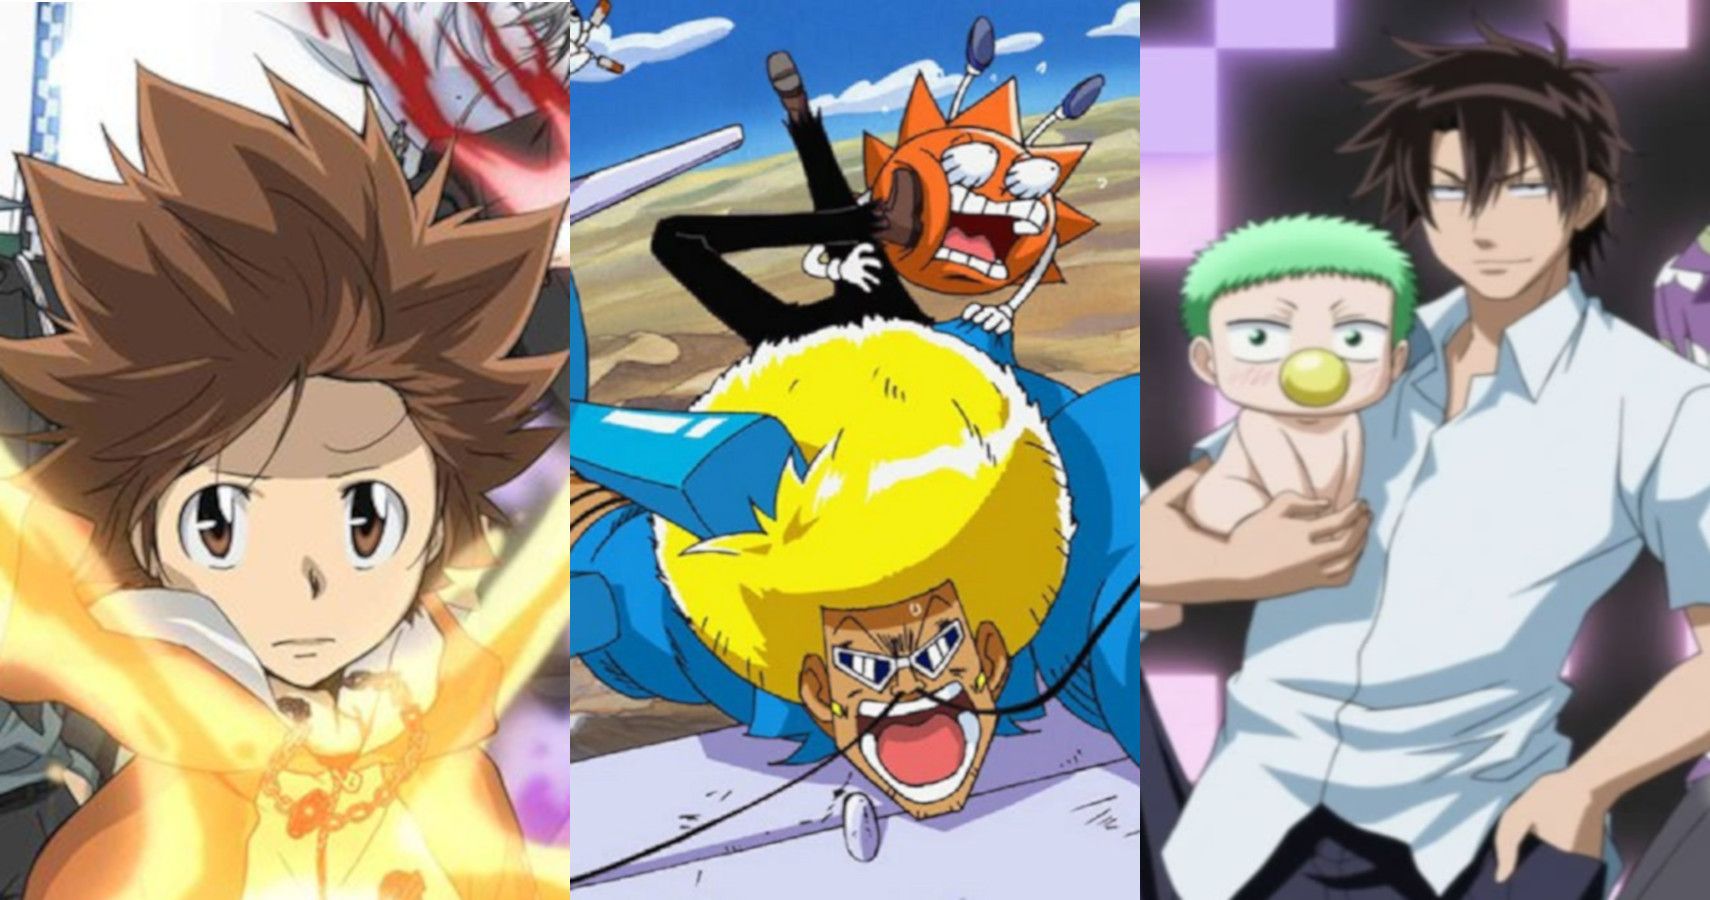 Shonen Jump 10 Manga That Never Got Complete Anime Adaptations